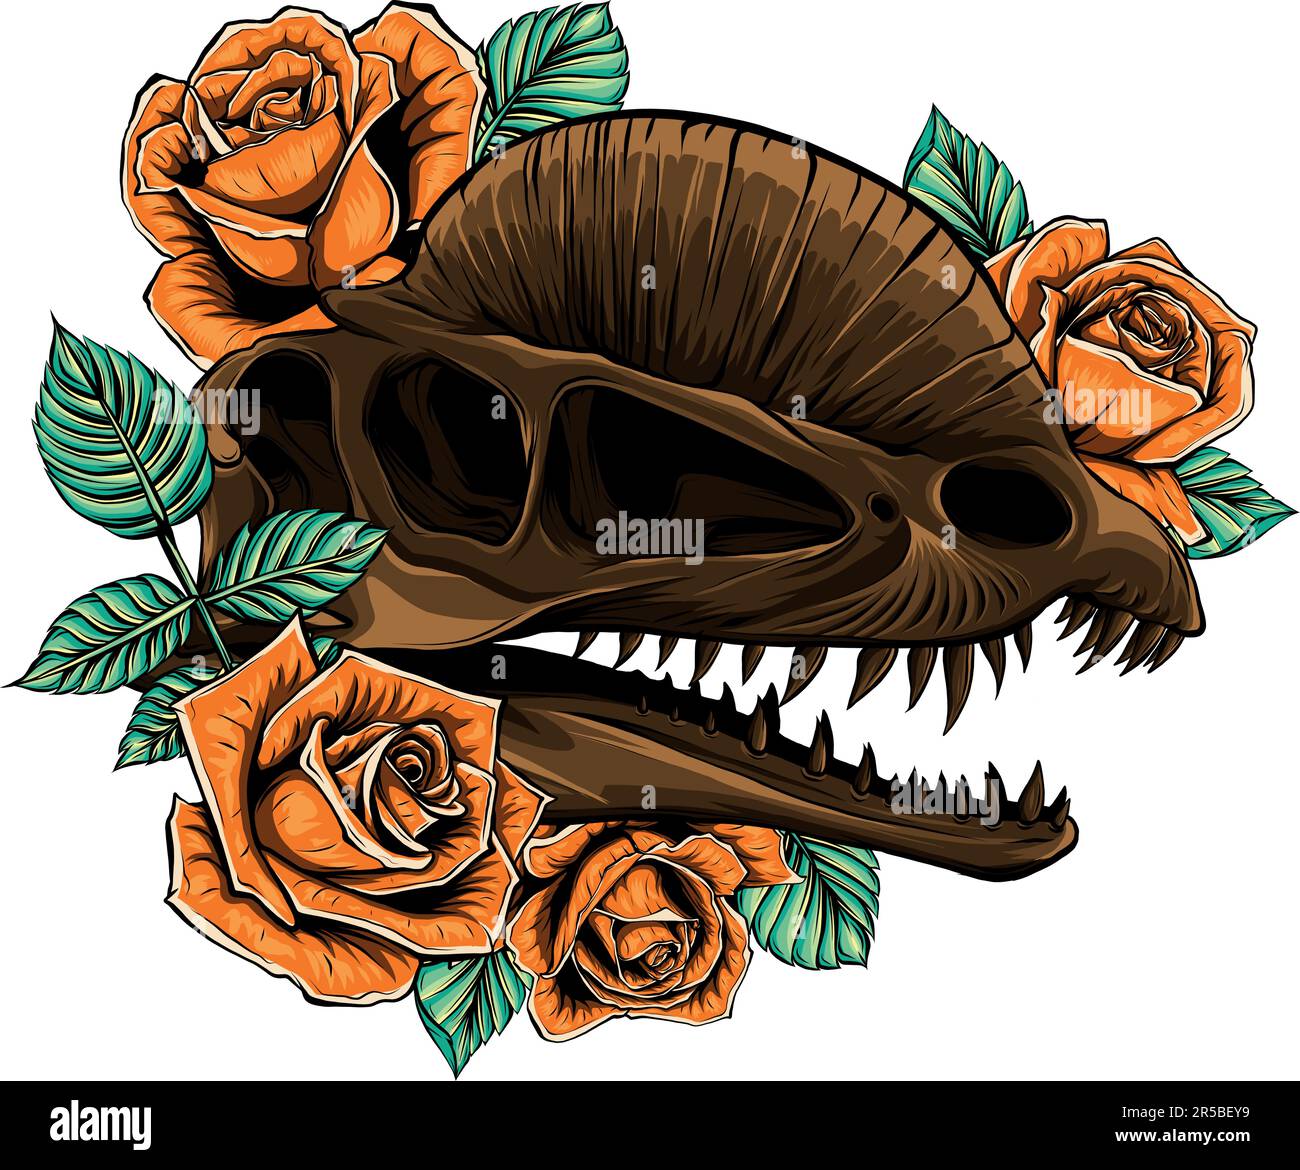 dinosaur head skull with rose artwork design Stock Vector